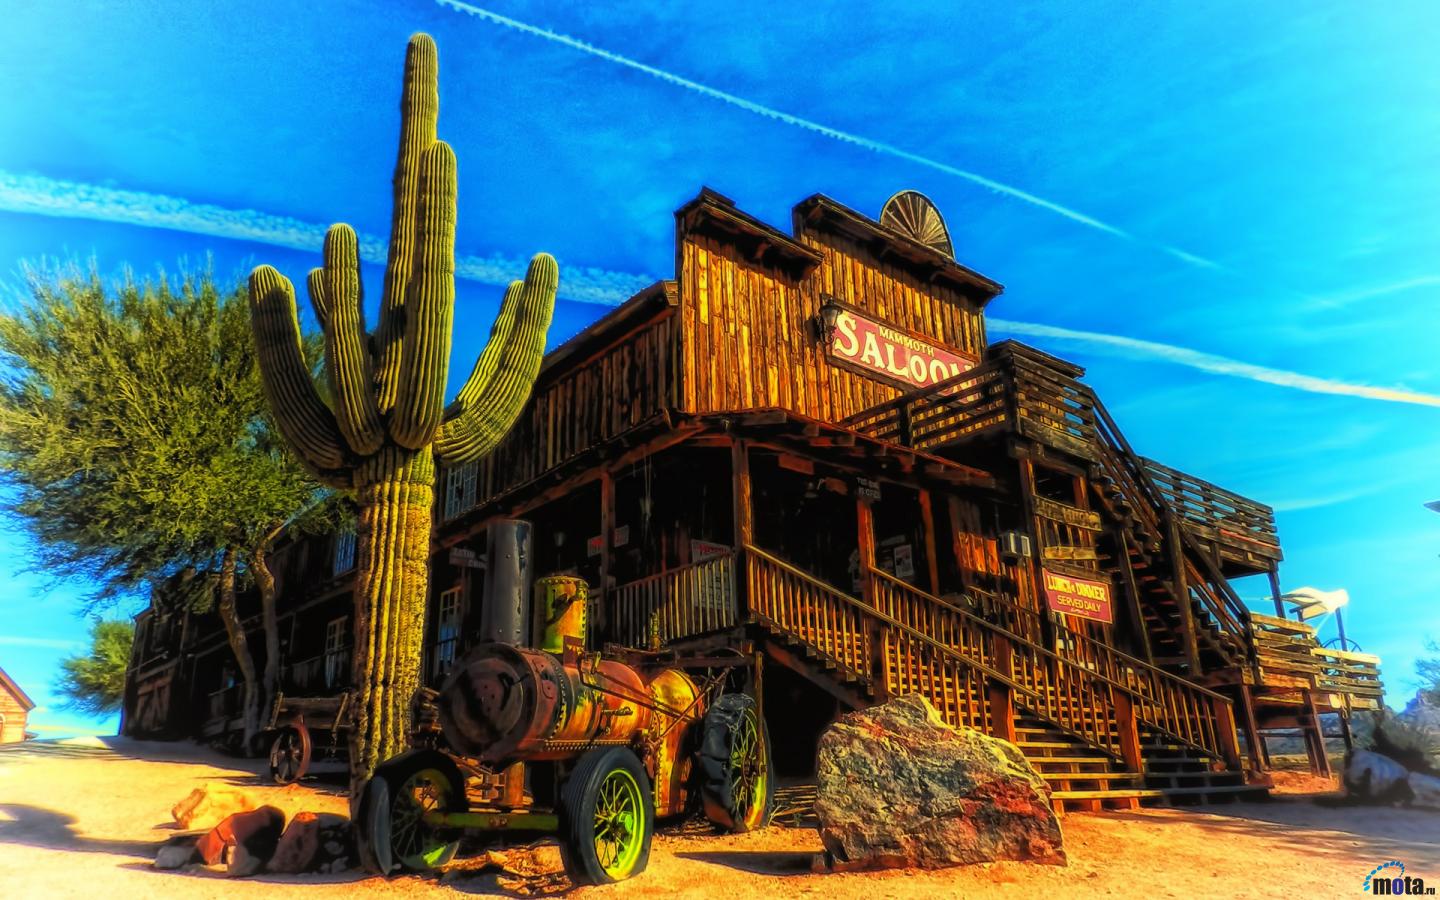 Wallpaper Saloon In The Wild West X Widescreen